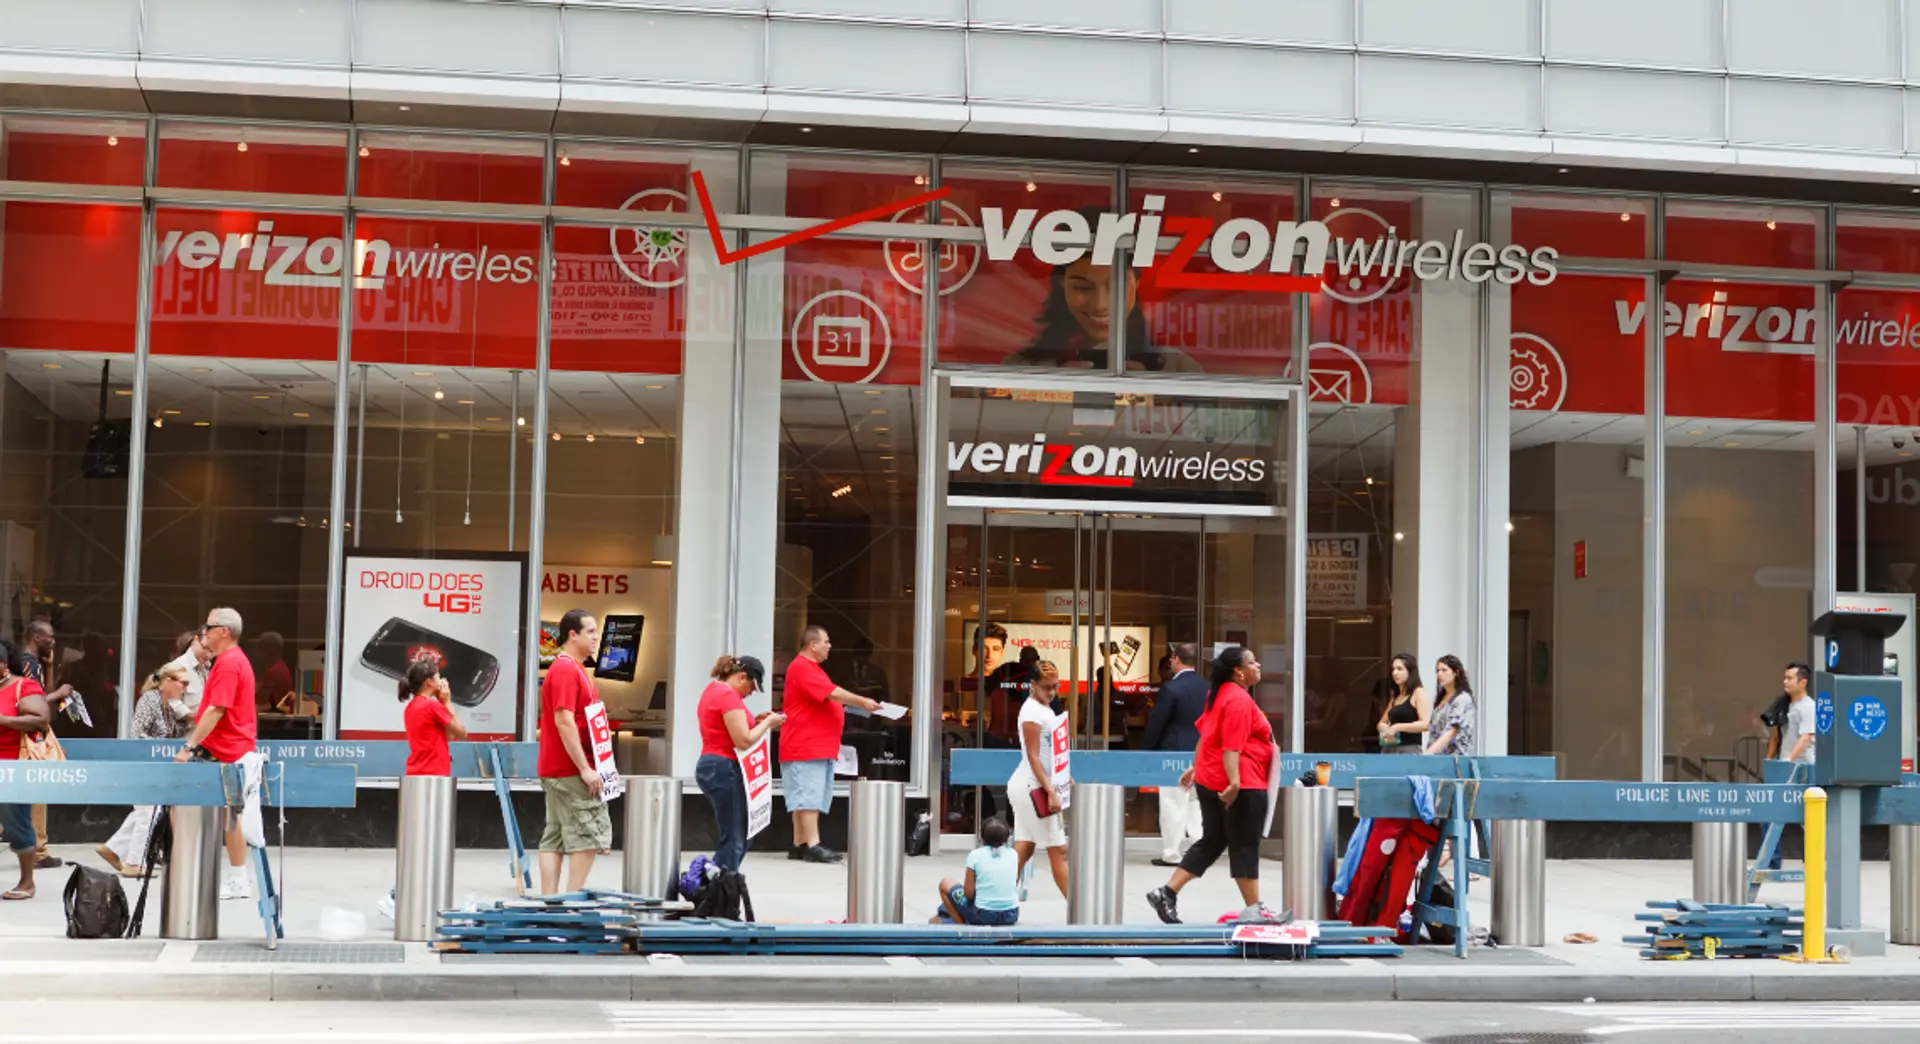 The Verizon Logo & Brand: A Check Mark To Branding Success